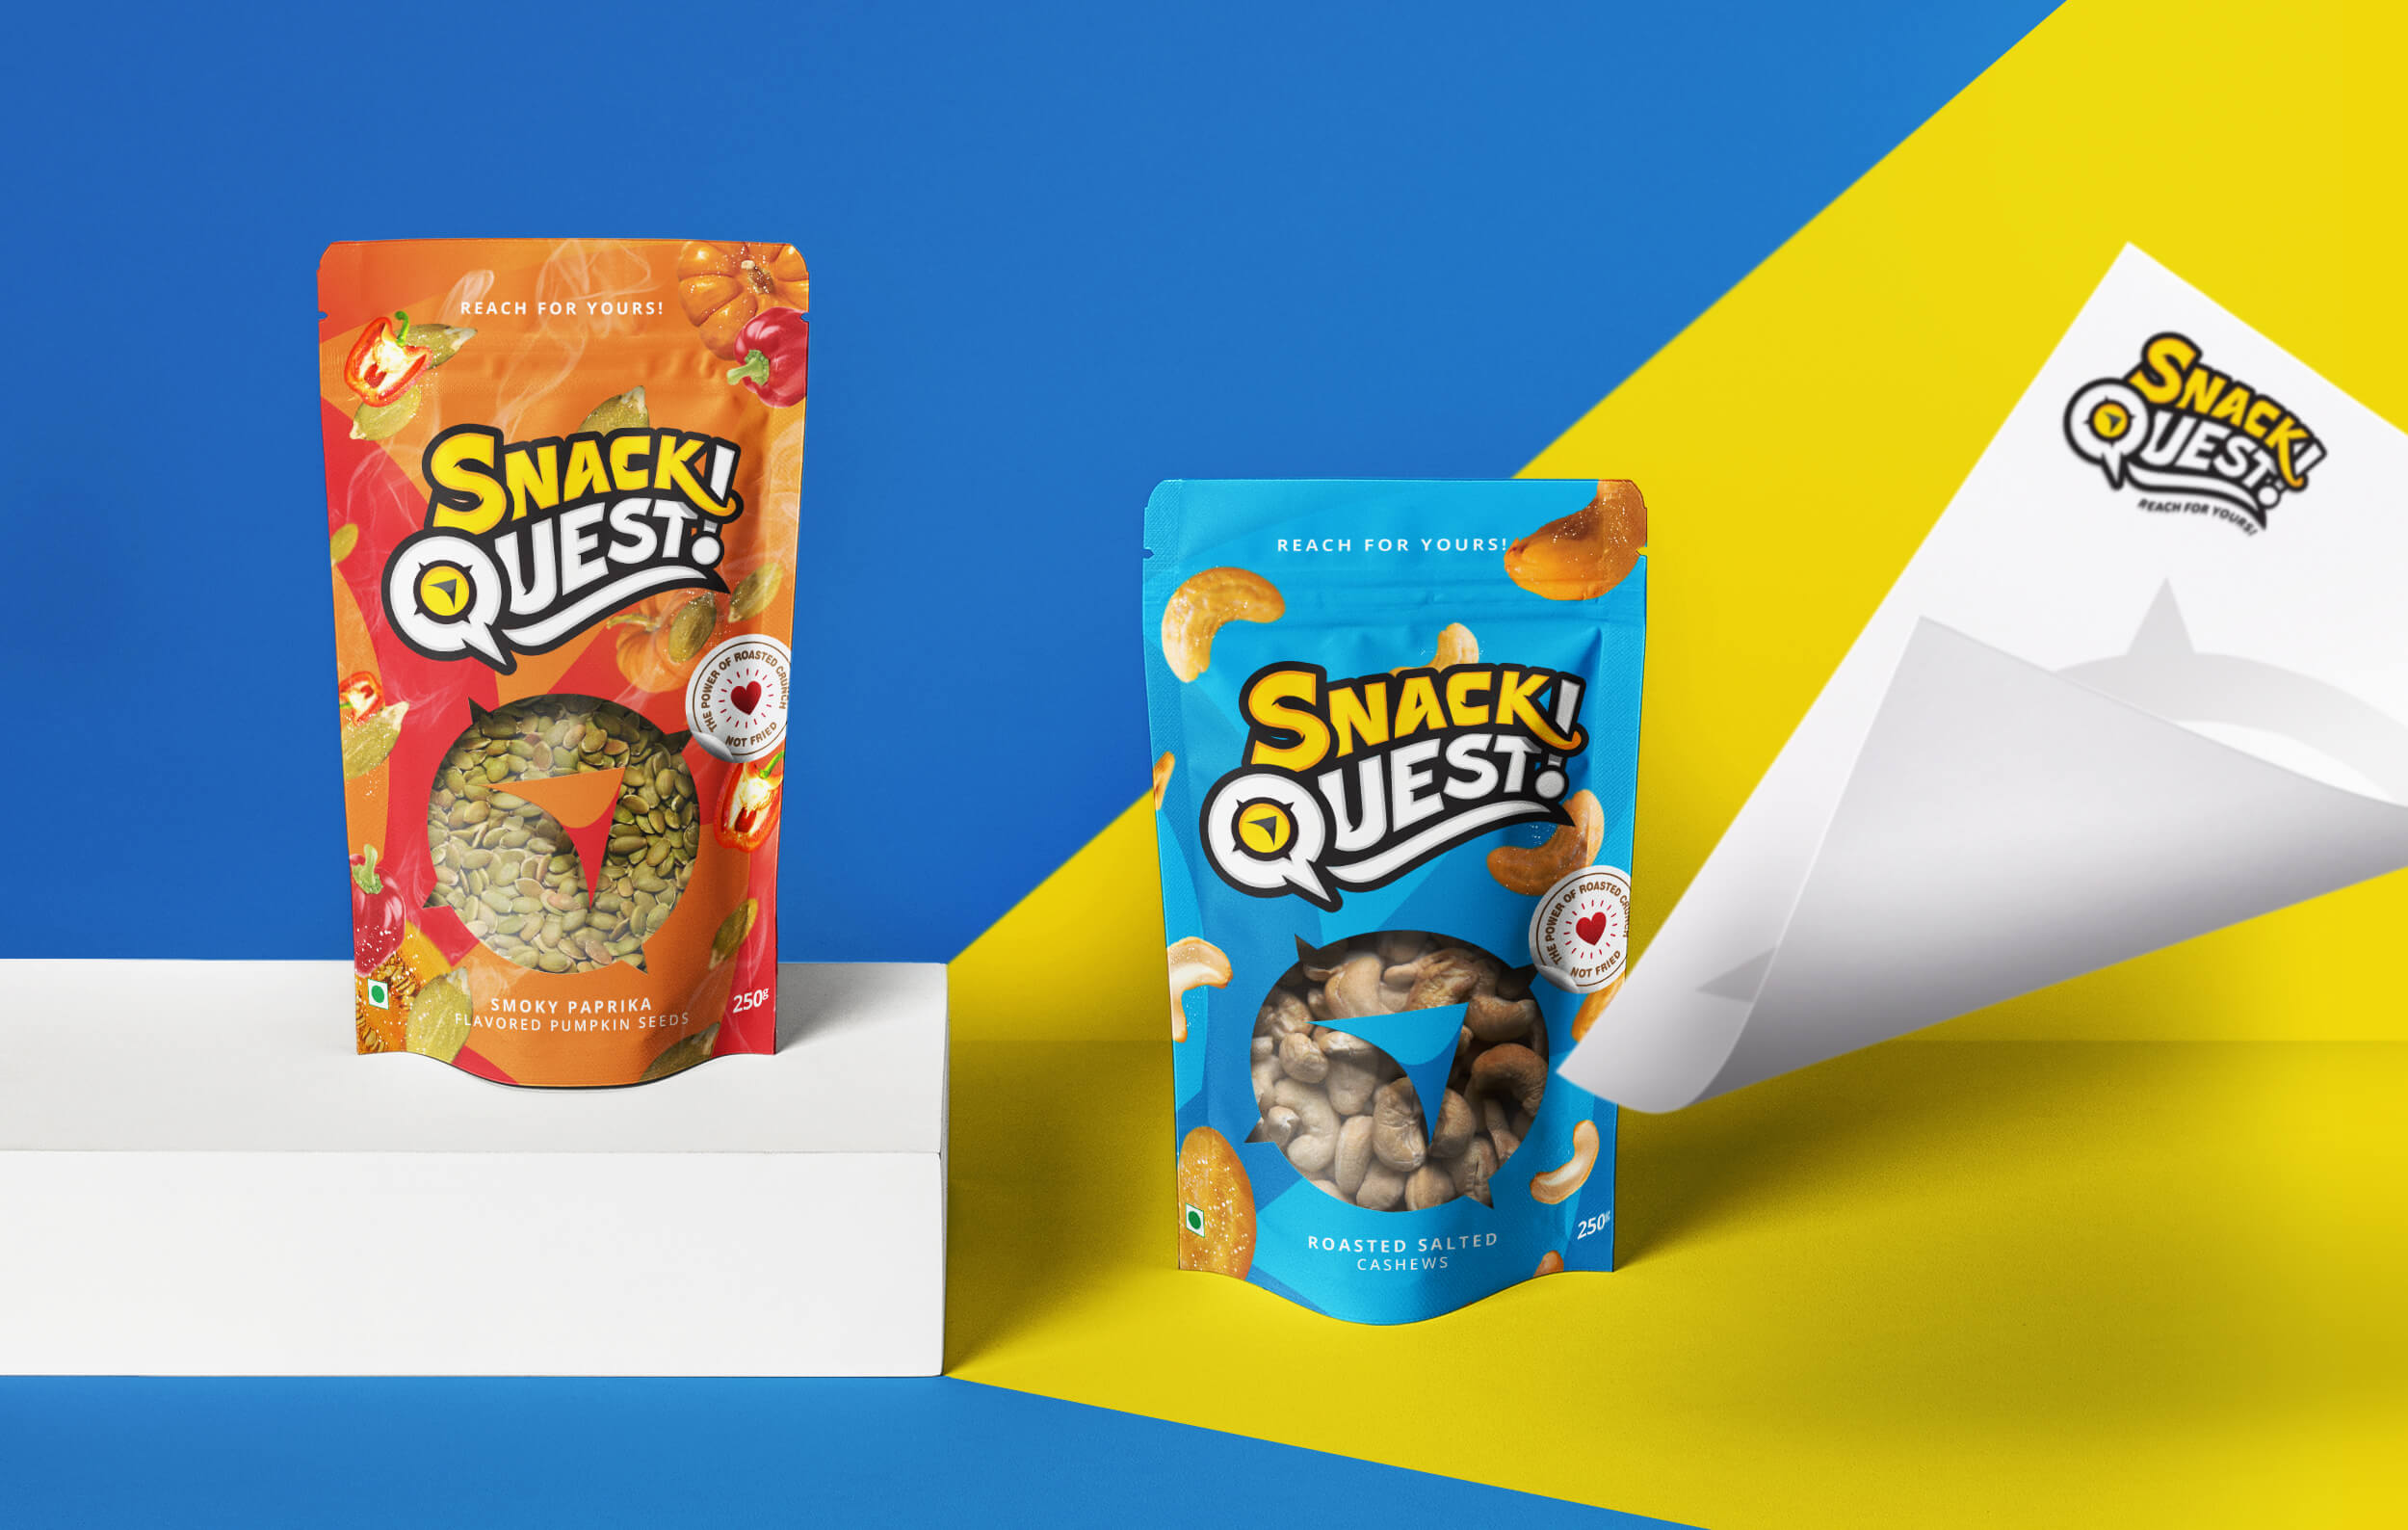 Snack-Quest-brand-identity-packaging-design-by-Artisticodopeo-Designz(5).jpg Image